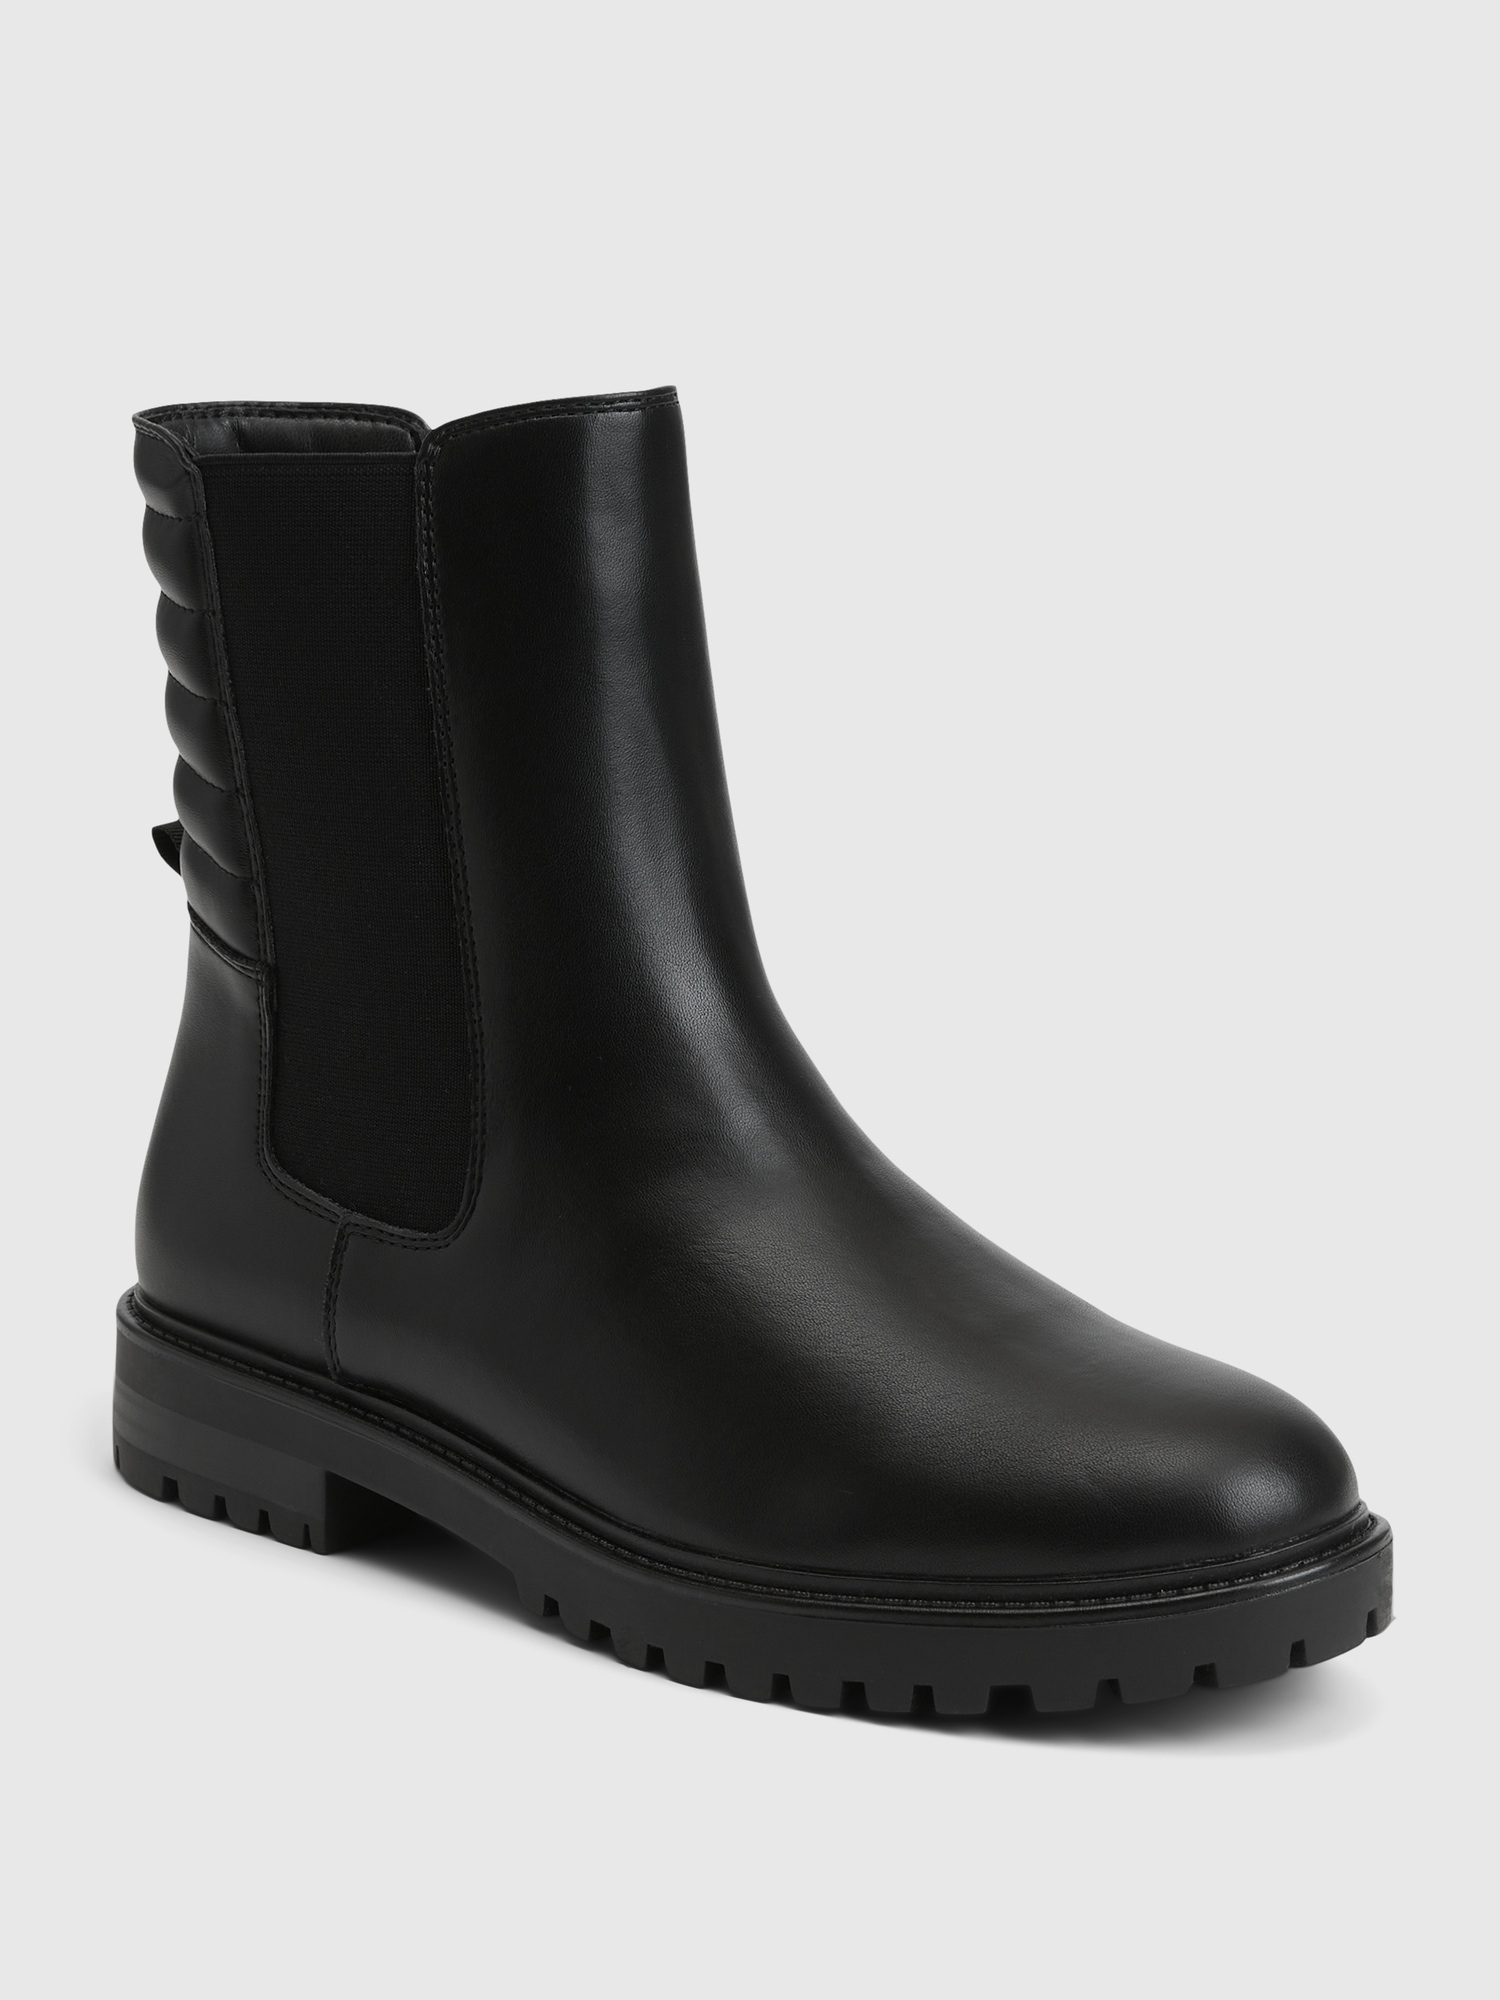 Gap Chelsea Boots In Black